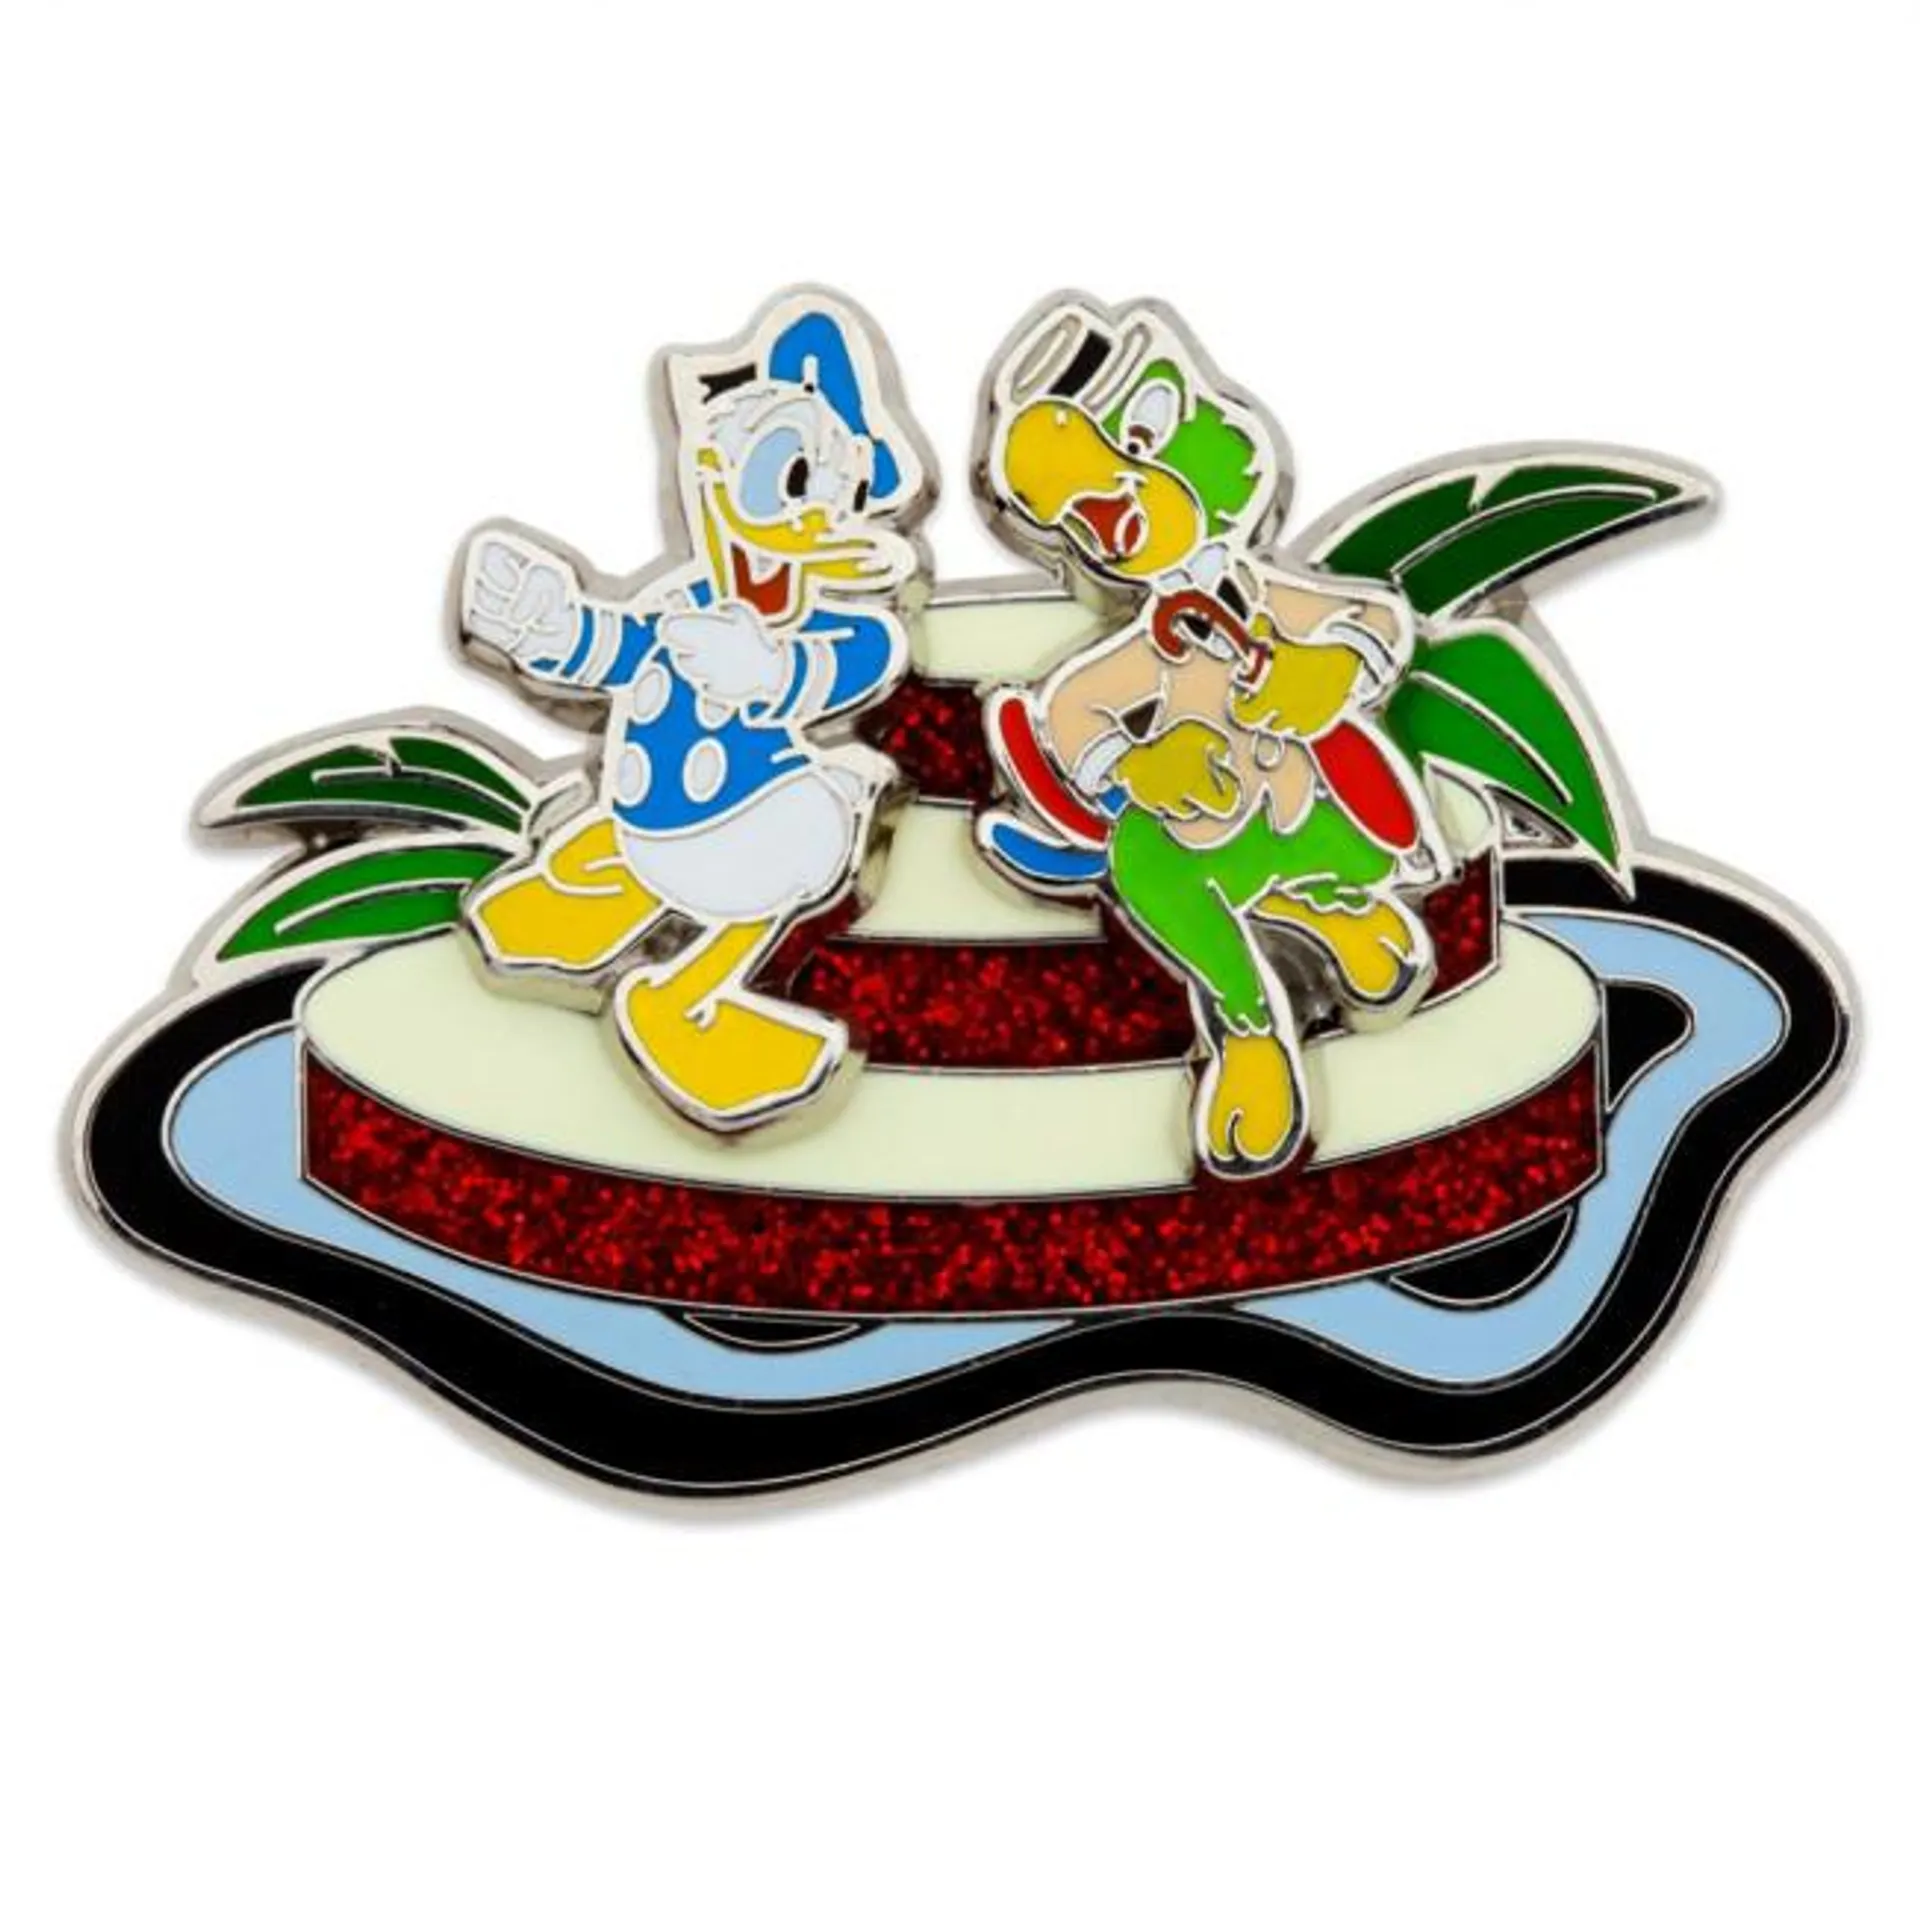 Disney Store Saludos Amigos 80th Anniversary Limited Edition Pin